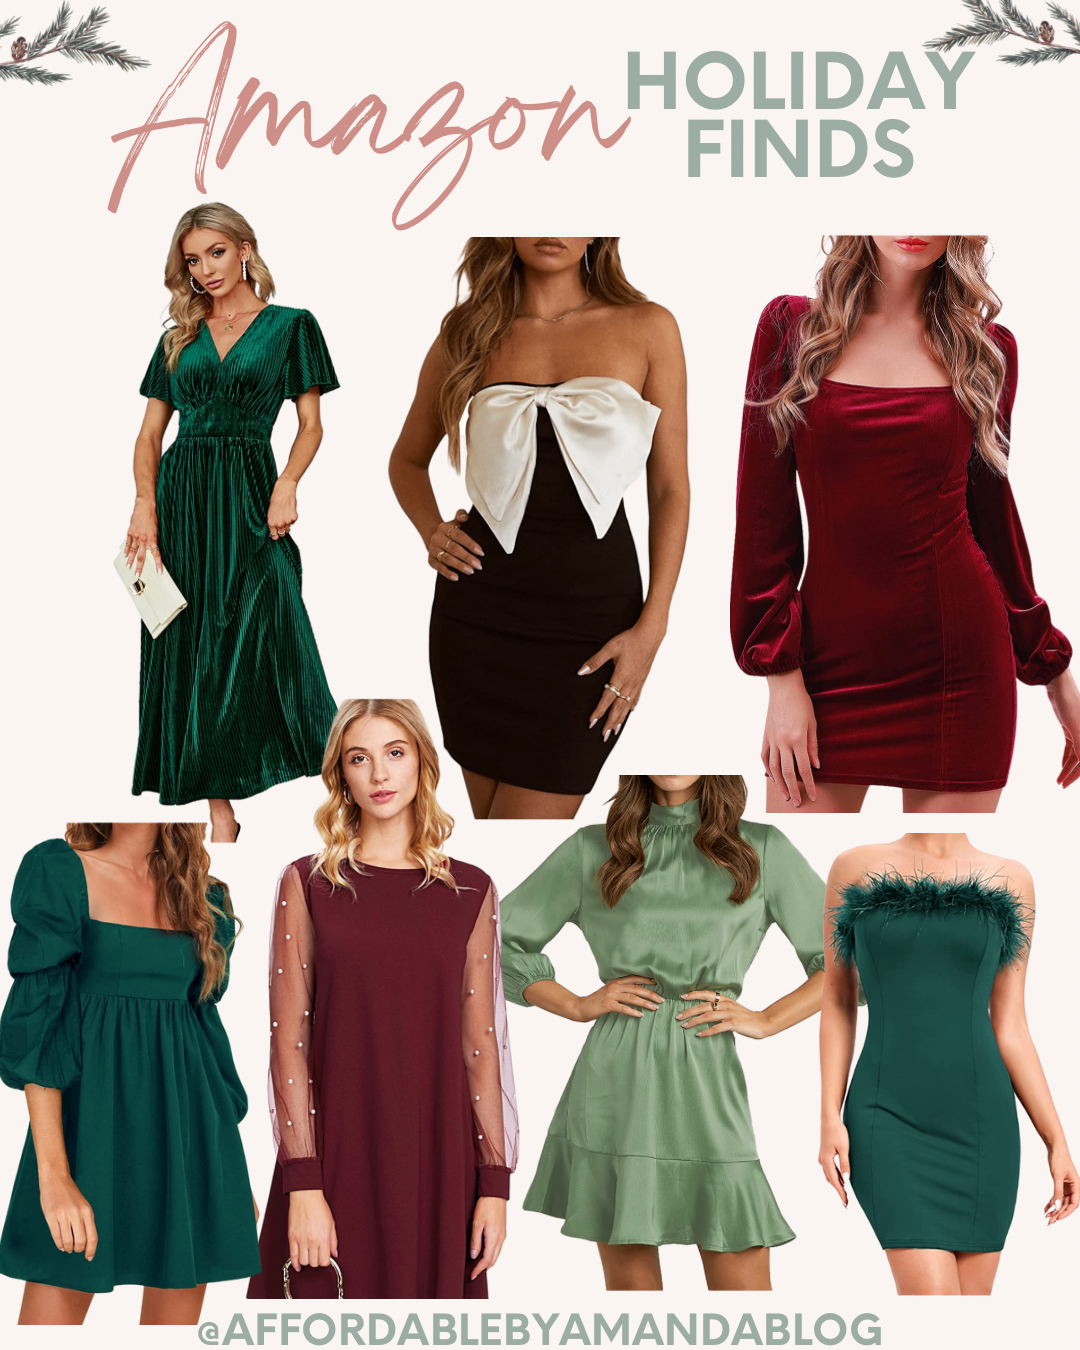 Amazon Holiday Dresses | Amazon Dresses for Christmas | Holiday Dresses at Amazon Under $50 | Amazon Holiday Style